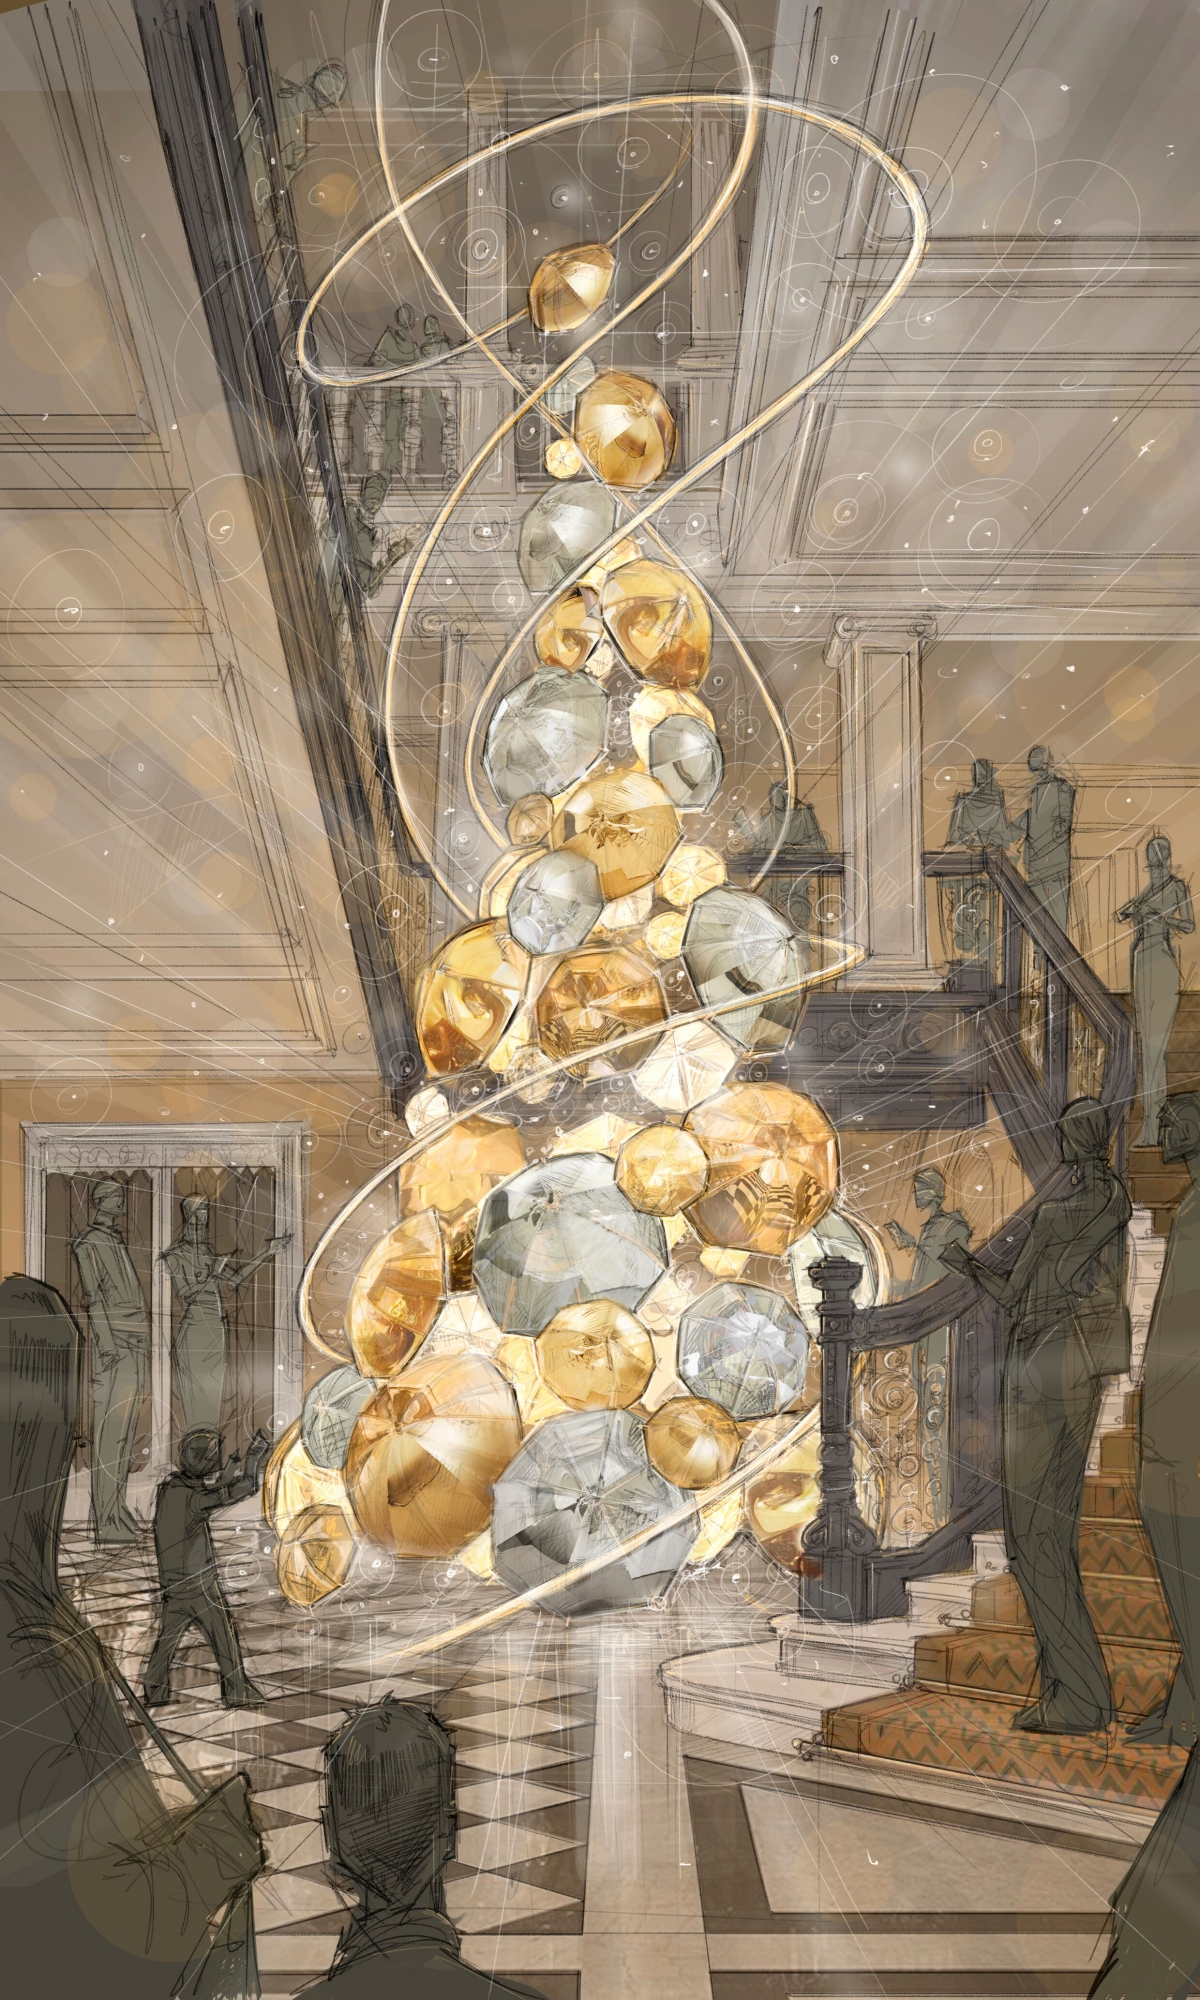 Designer Decorated Christmas Trees